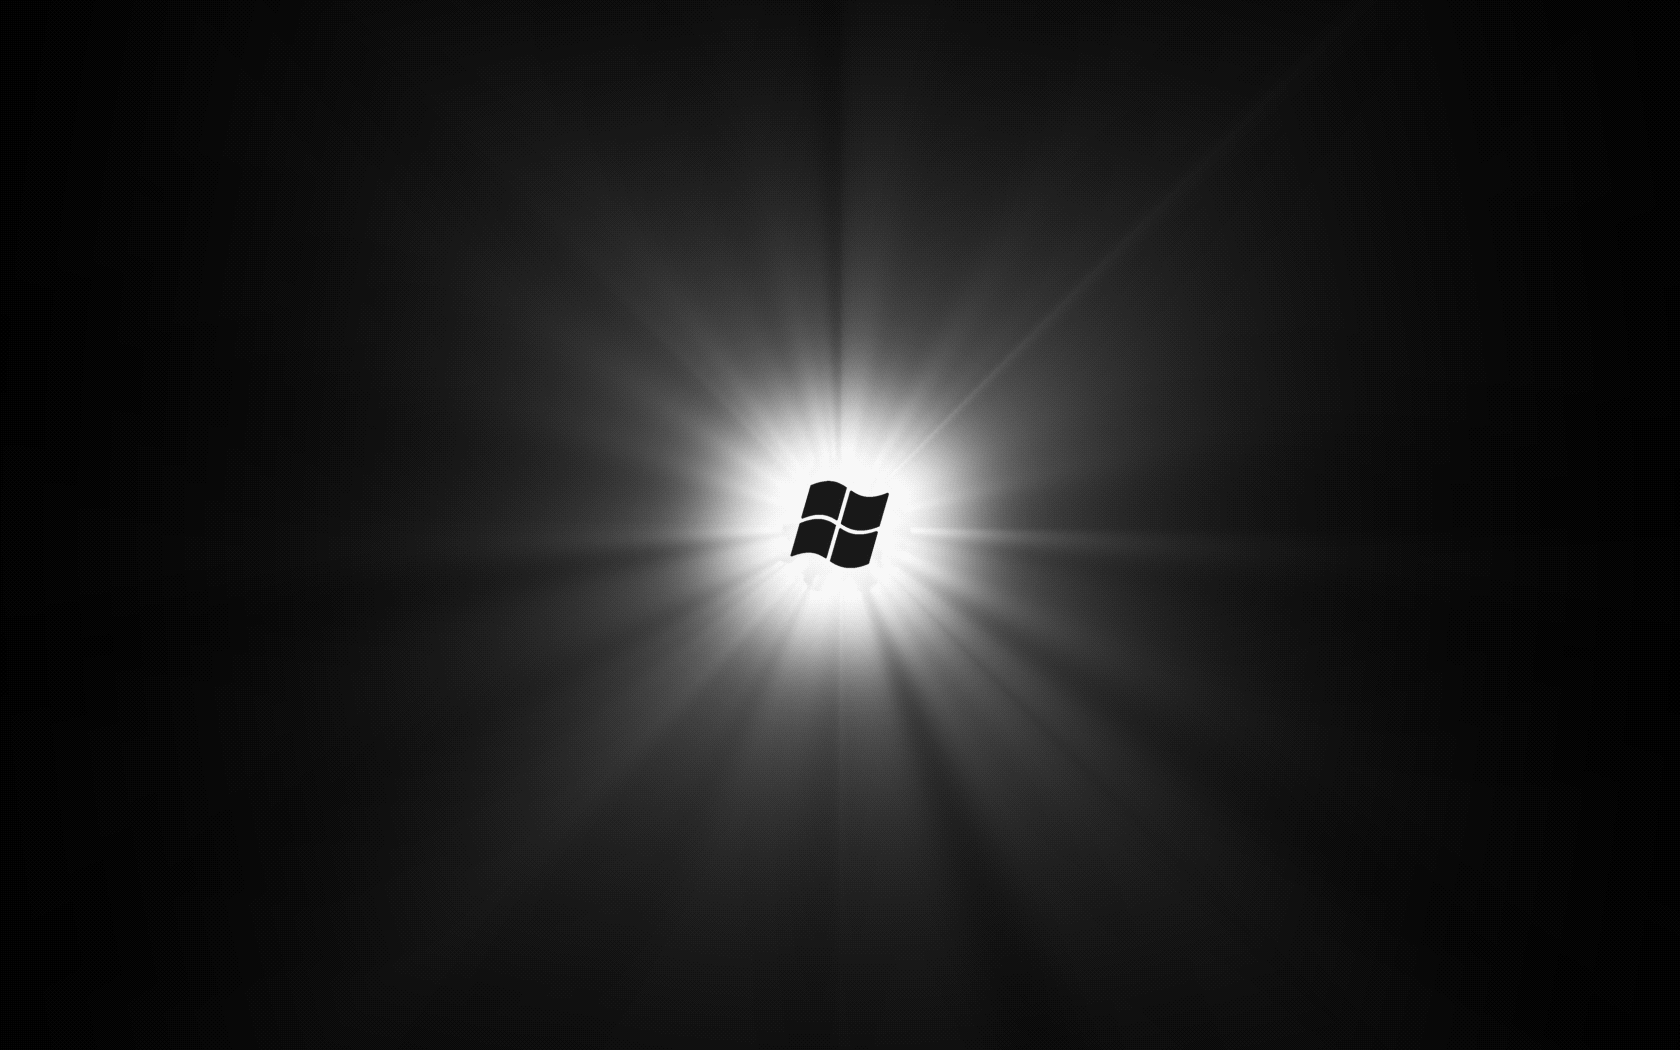 Install the Windows 81 Update KB 2919355 - Windows Help